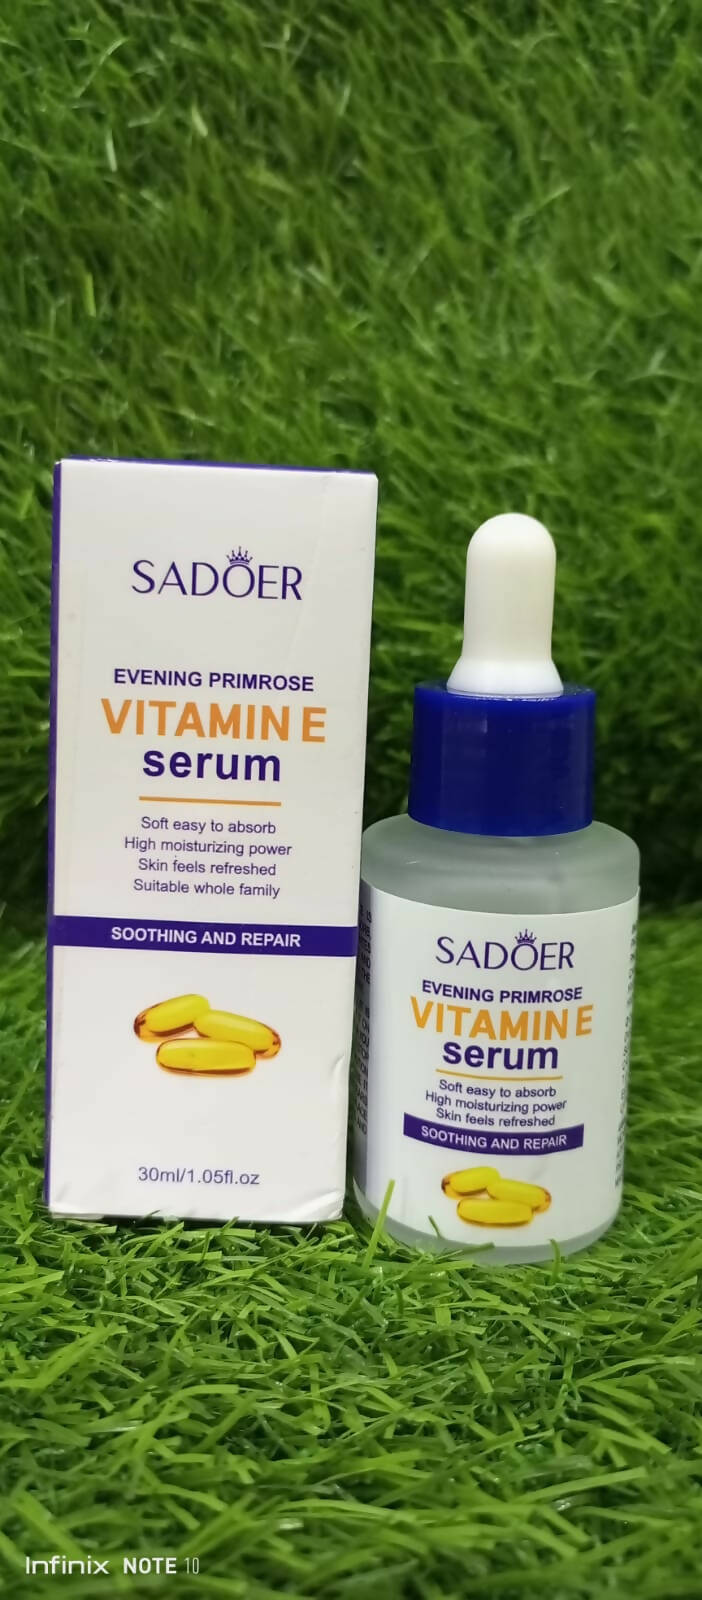 Sadoer Evening Primrose Vitamin E Serum